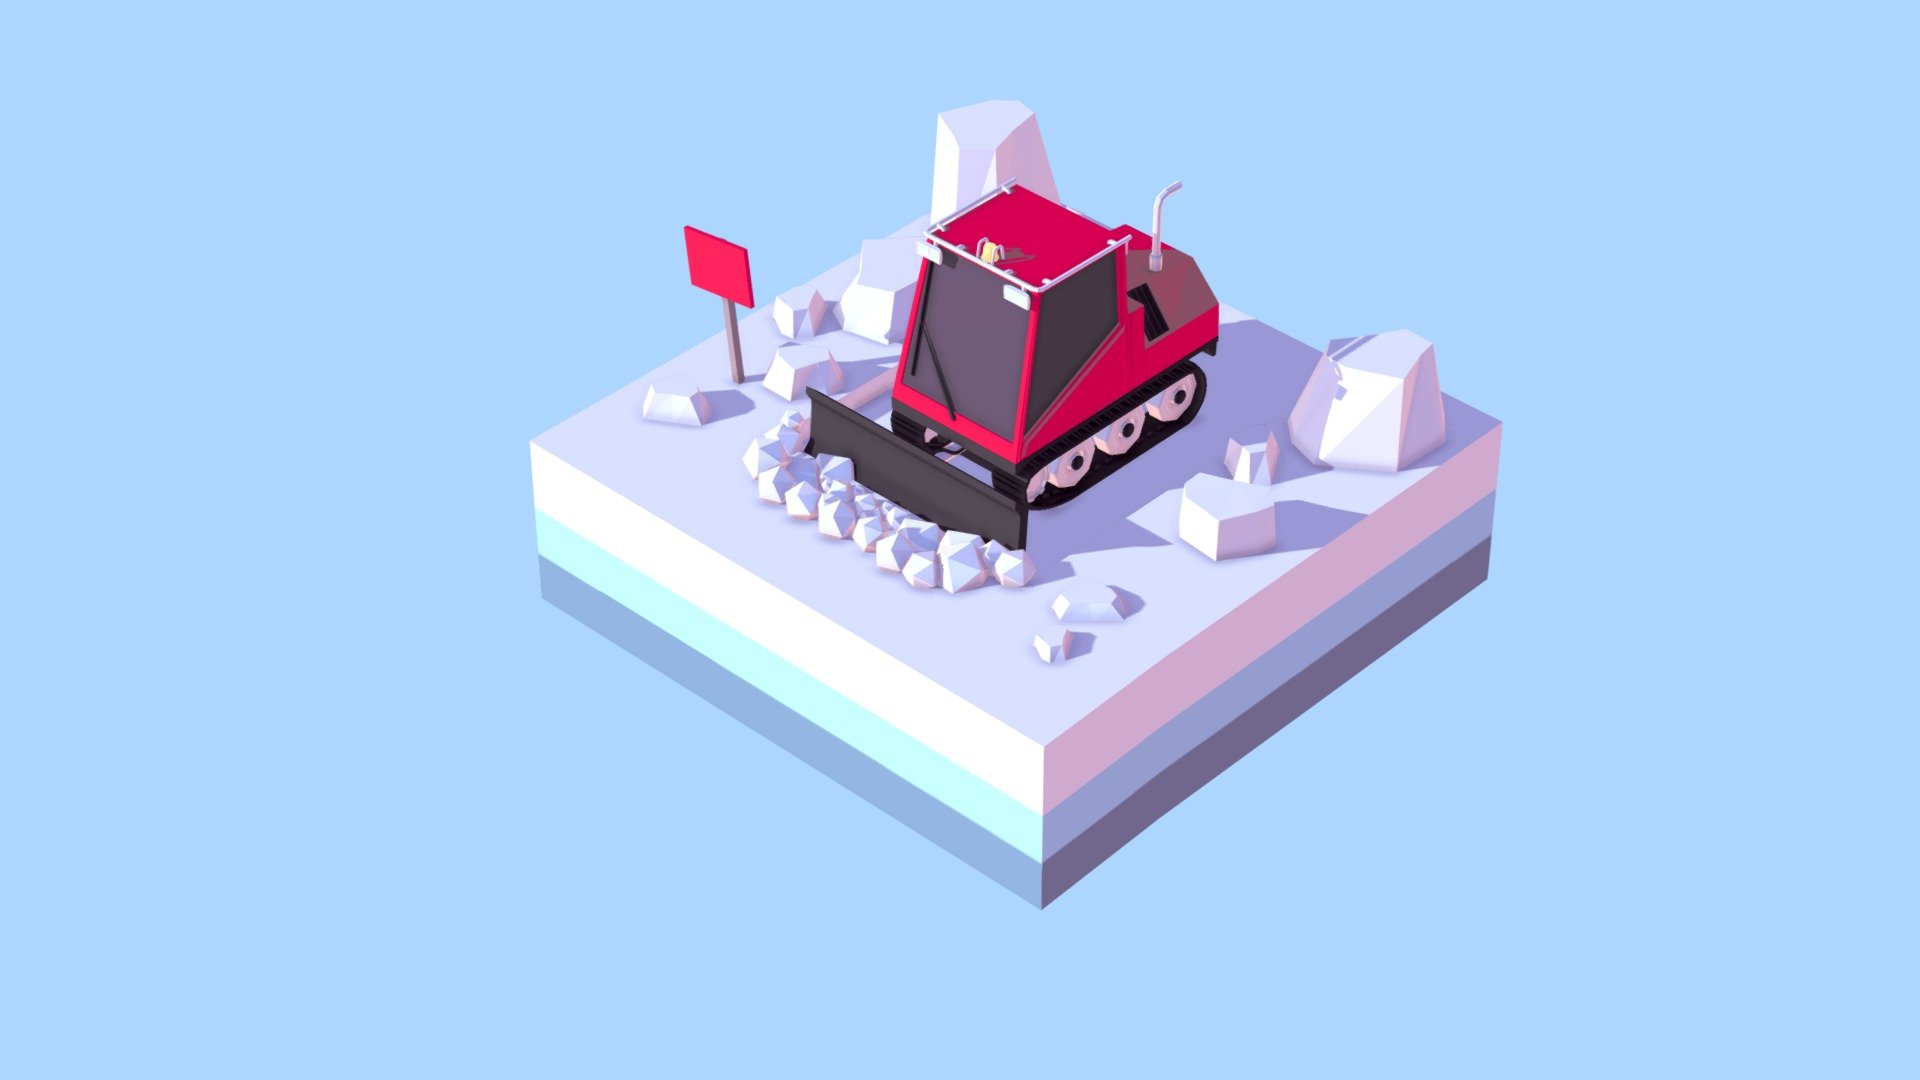 Cartoon Low Poly Snowcat Track Vehicle Island Scene

Created on Cinema 4d R17 

5347 Polygons

Procedural Textured 

Game Ready, VR Ready
 - Cartoon Low Poly Snowcat Small - Download Free 3D model by antonmoek 3d model